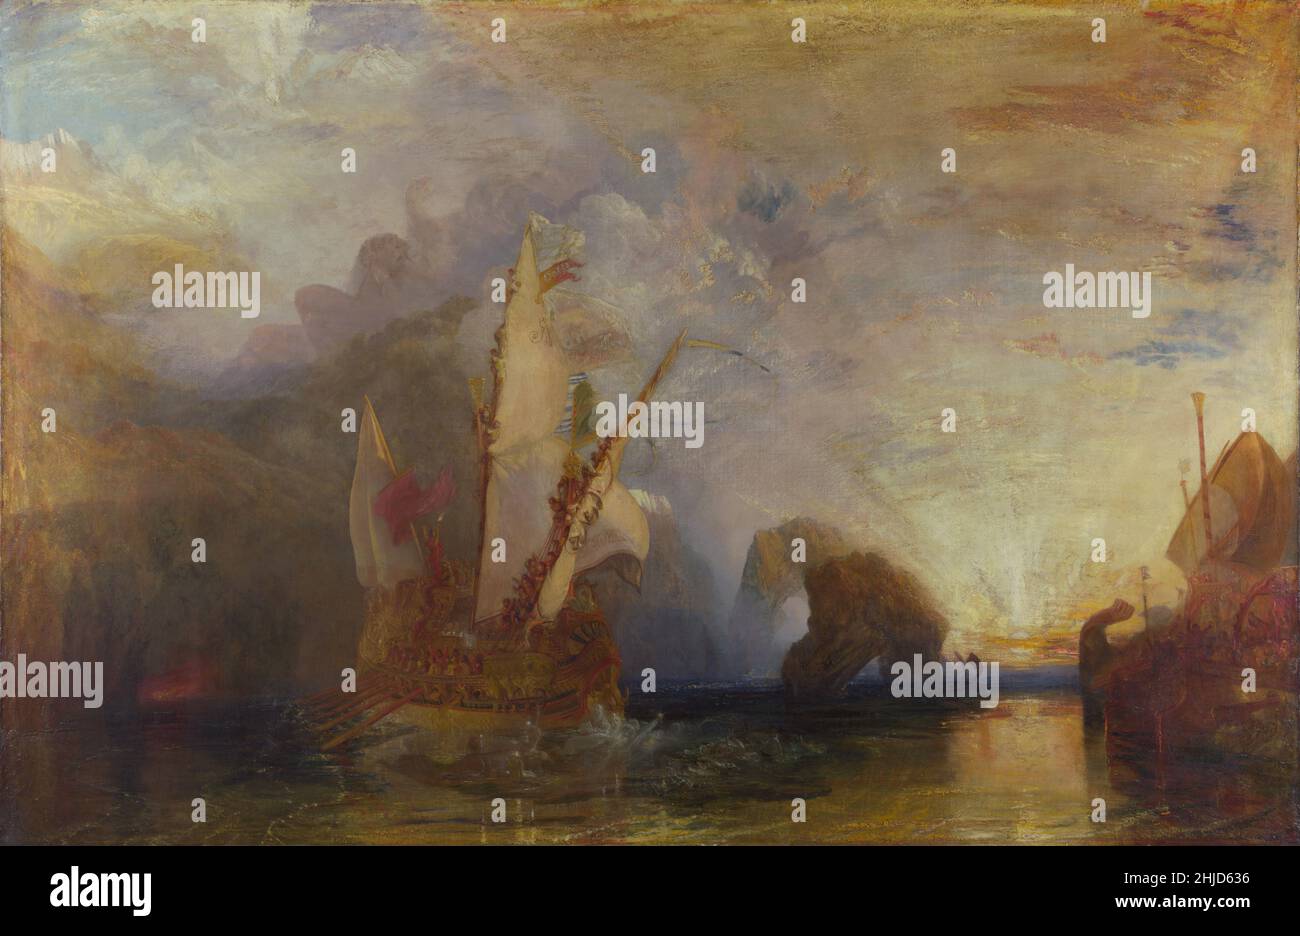 Ulysses leitet Polyphemus-Gemälde von William Turner ab Stockfoto